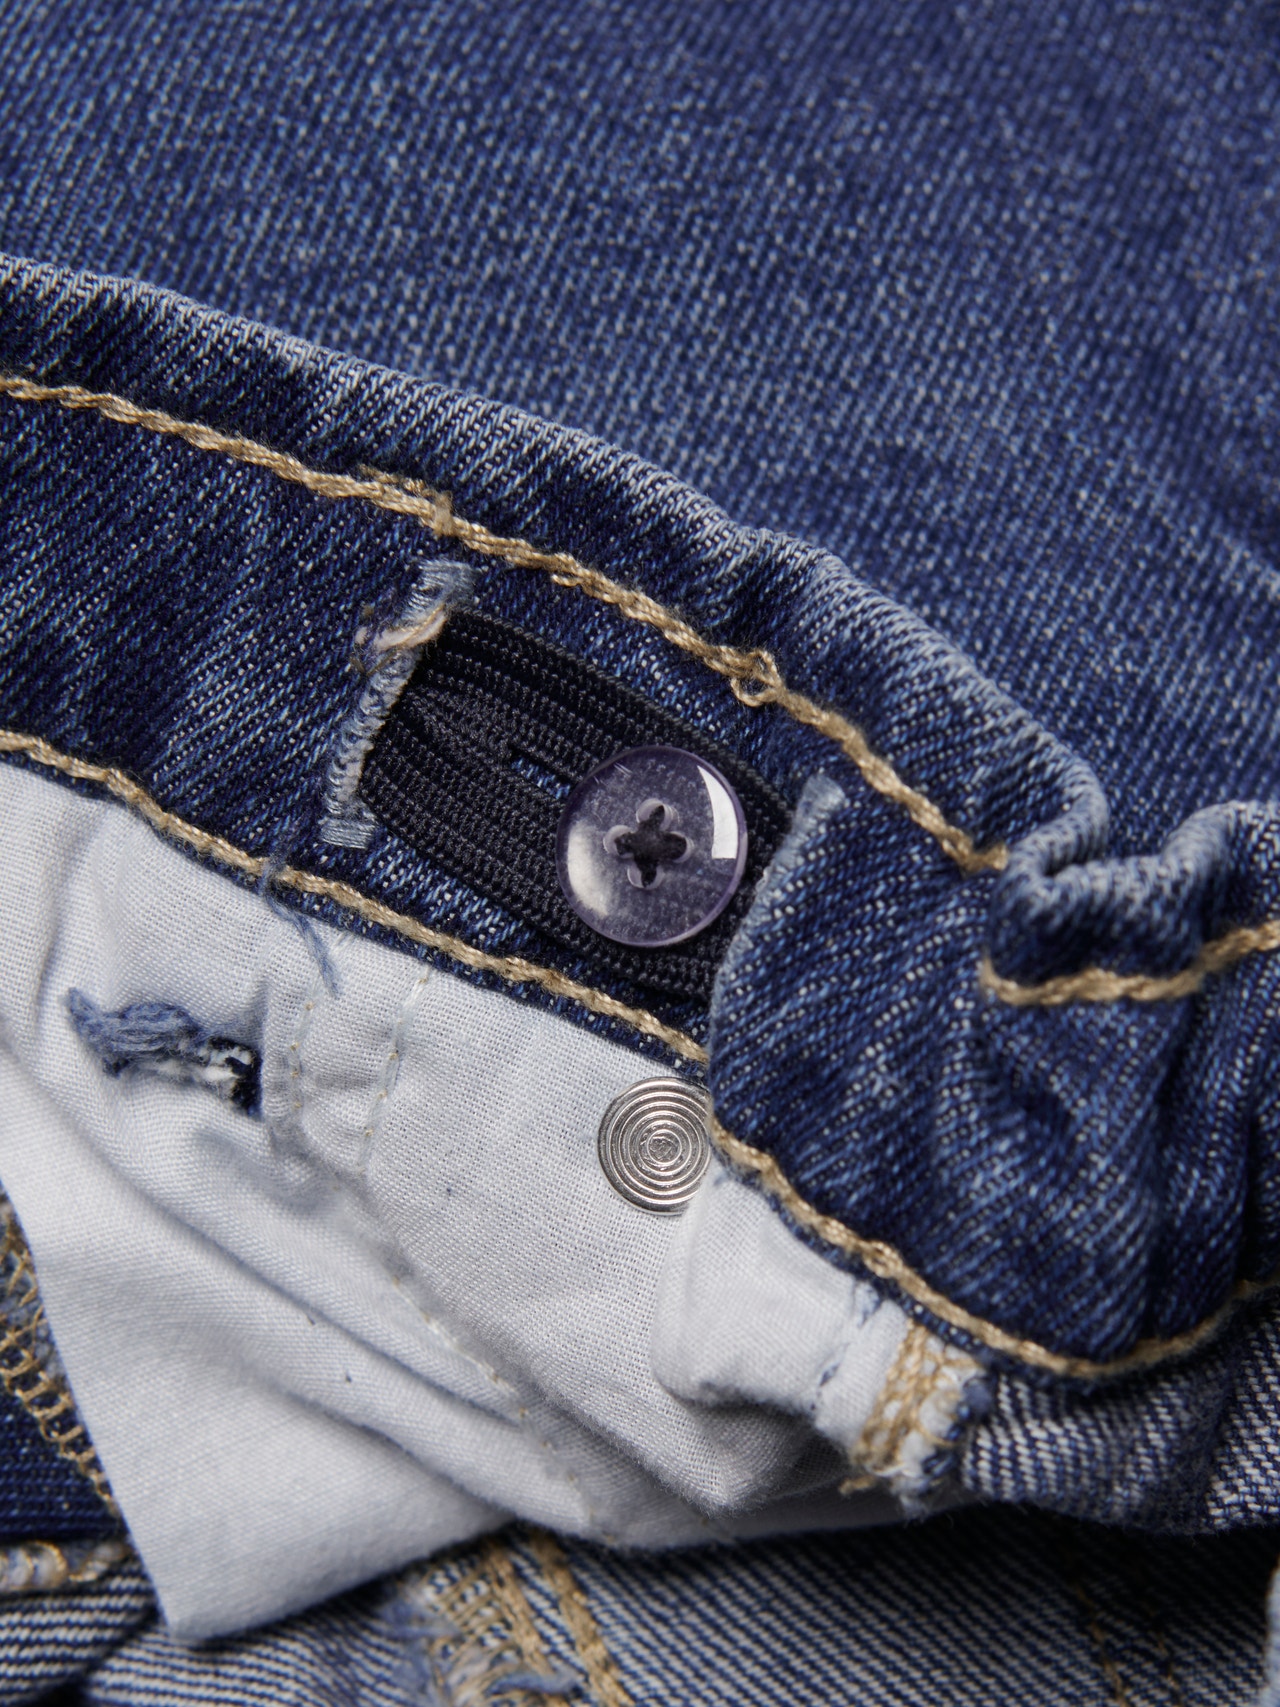 ONLY KONComet ancho Jeans de campana -Medium Blue Denim - 15278239